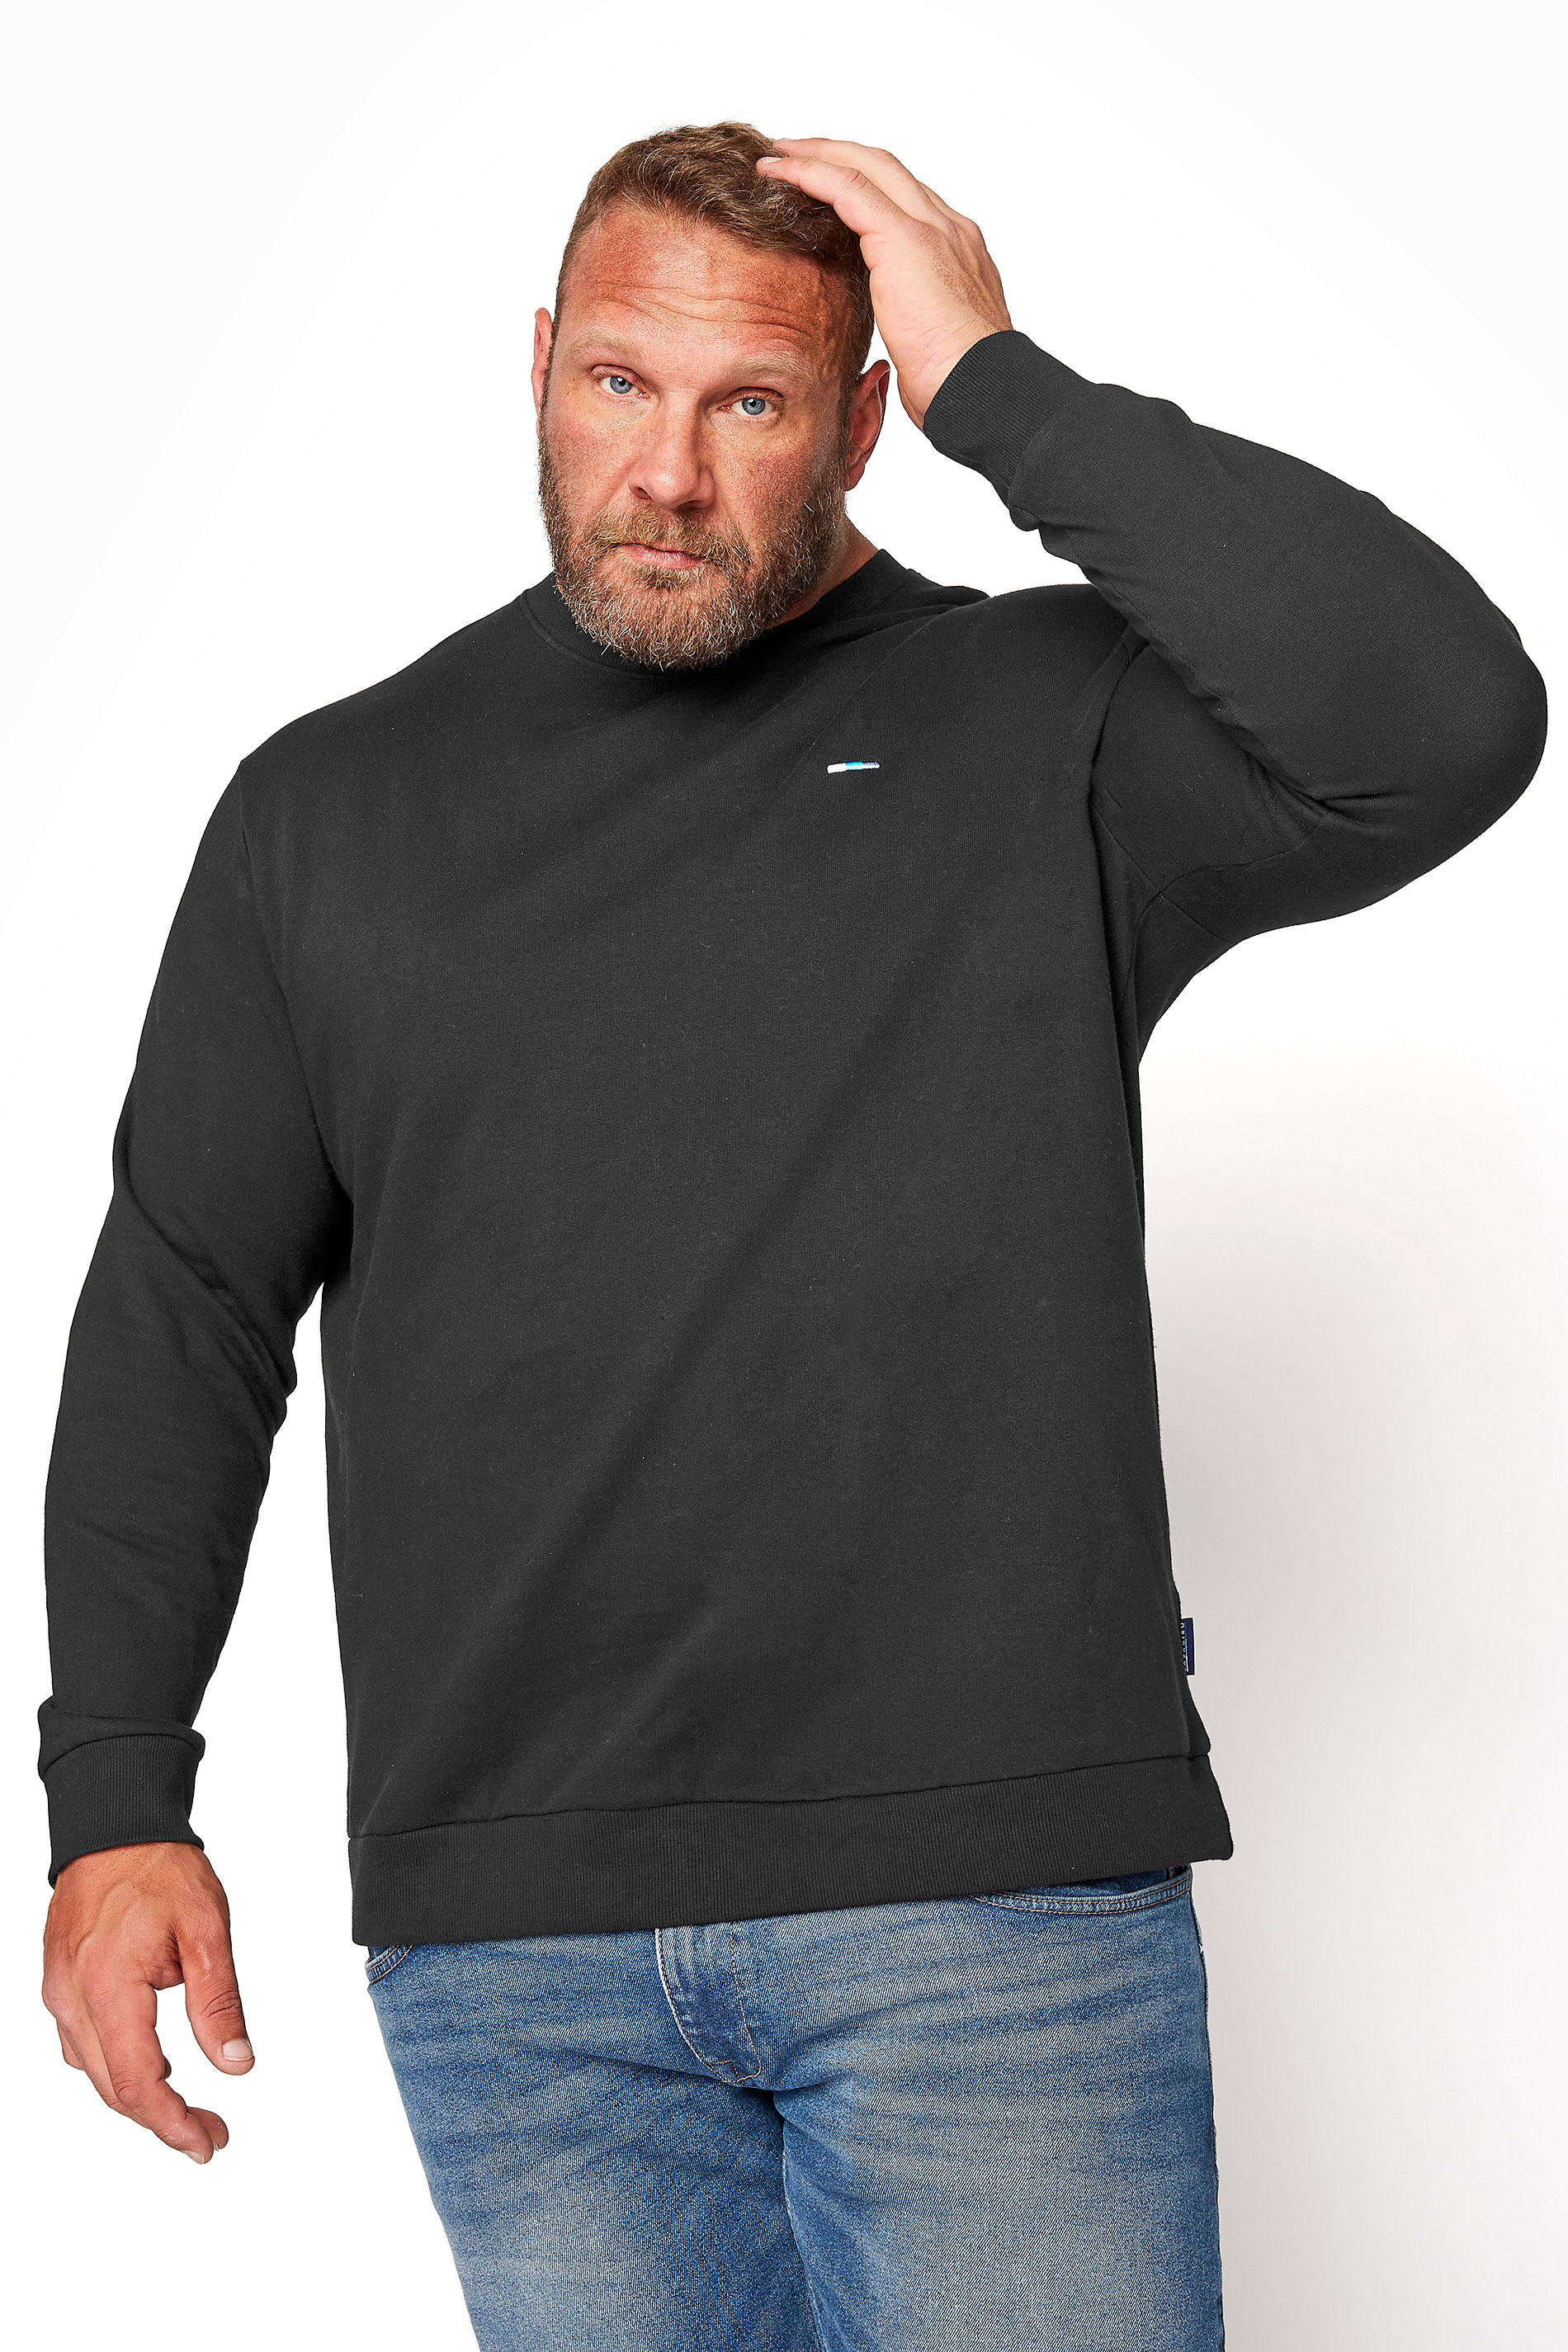 BadRhino Black Essential Sweatshirt | BadRhino 1